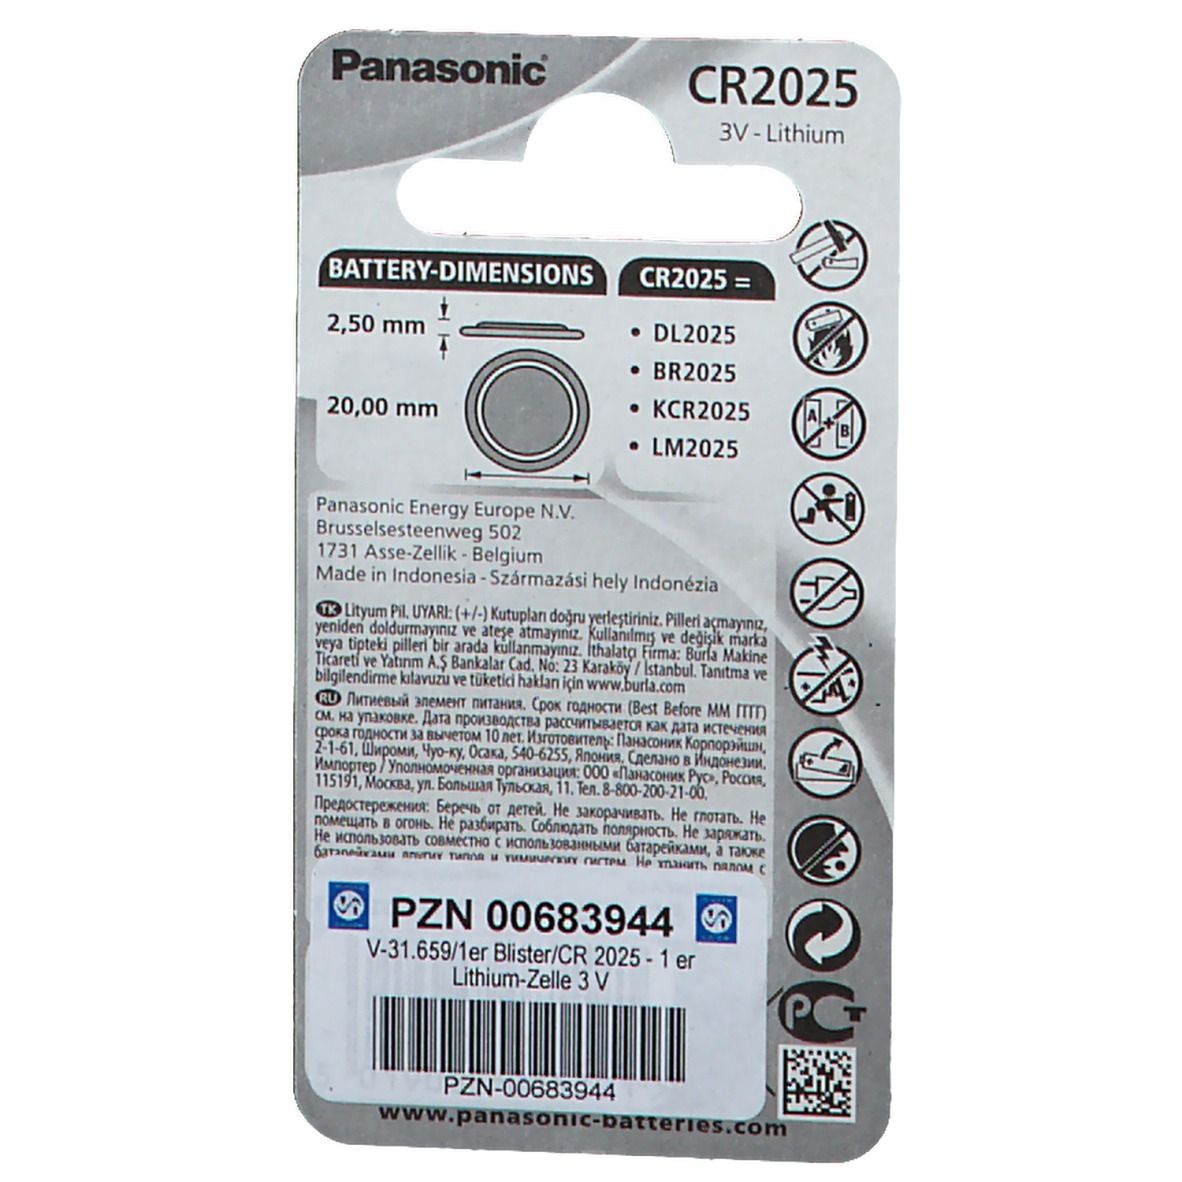 Panasonic® CR2025 3V